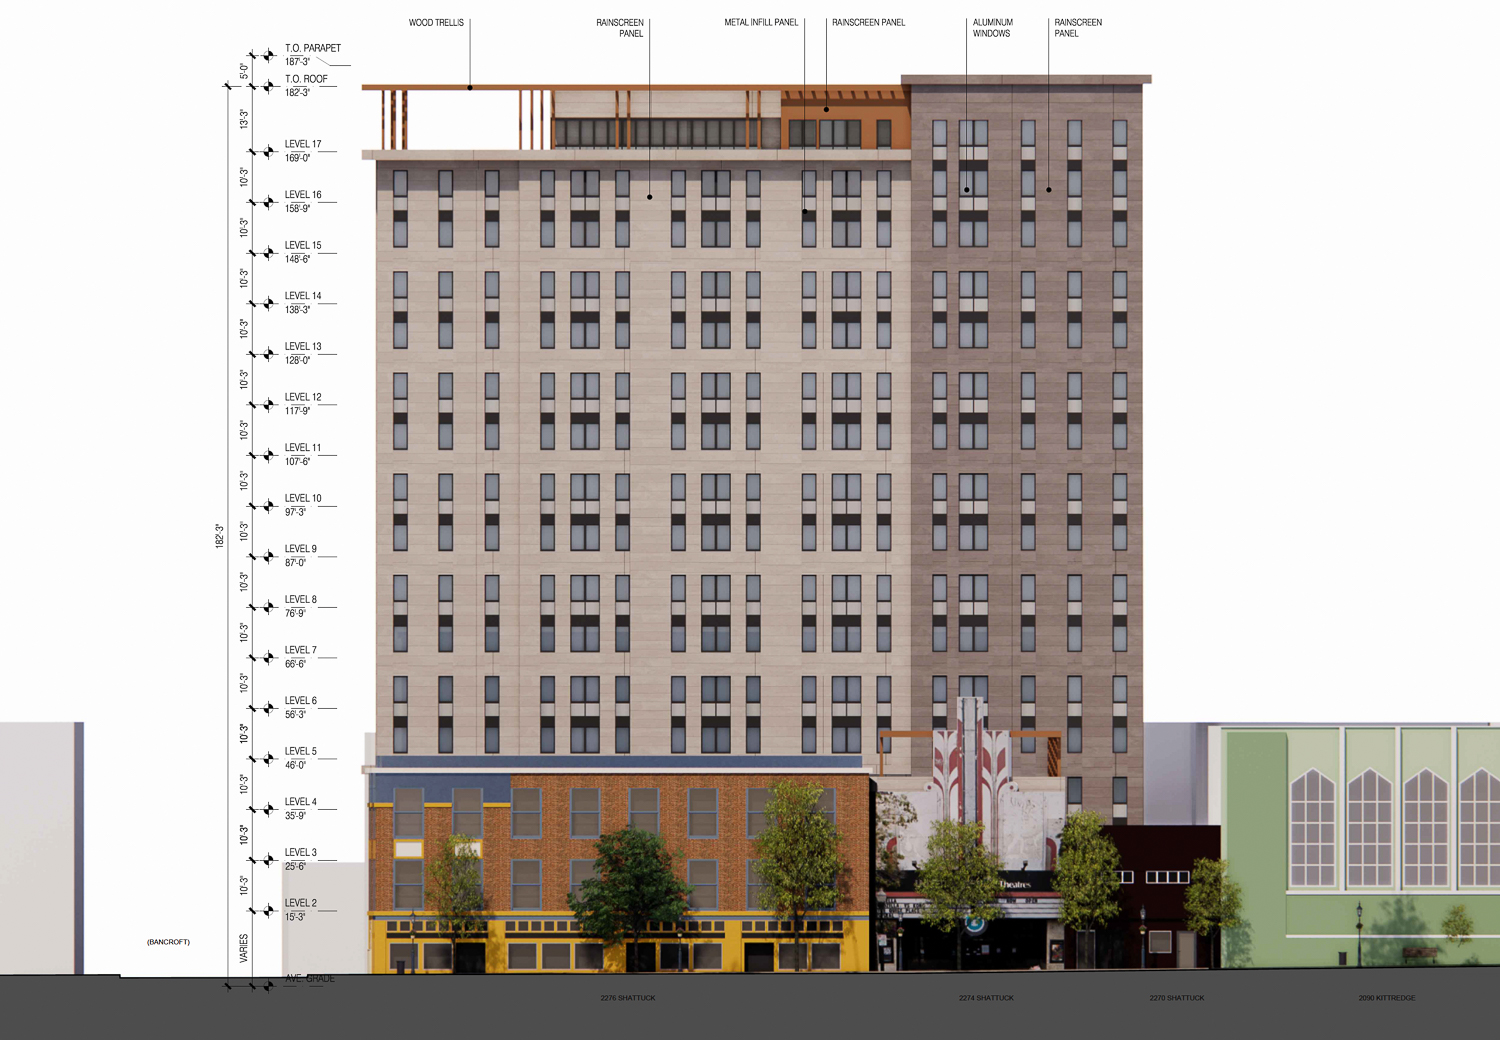 2274 Shattuck Avenue, facade elevation by Trachtenberg Architects